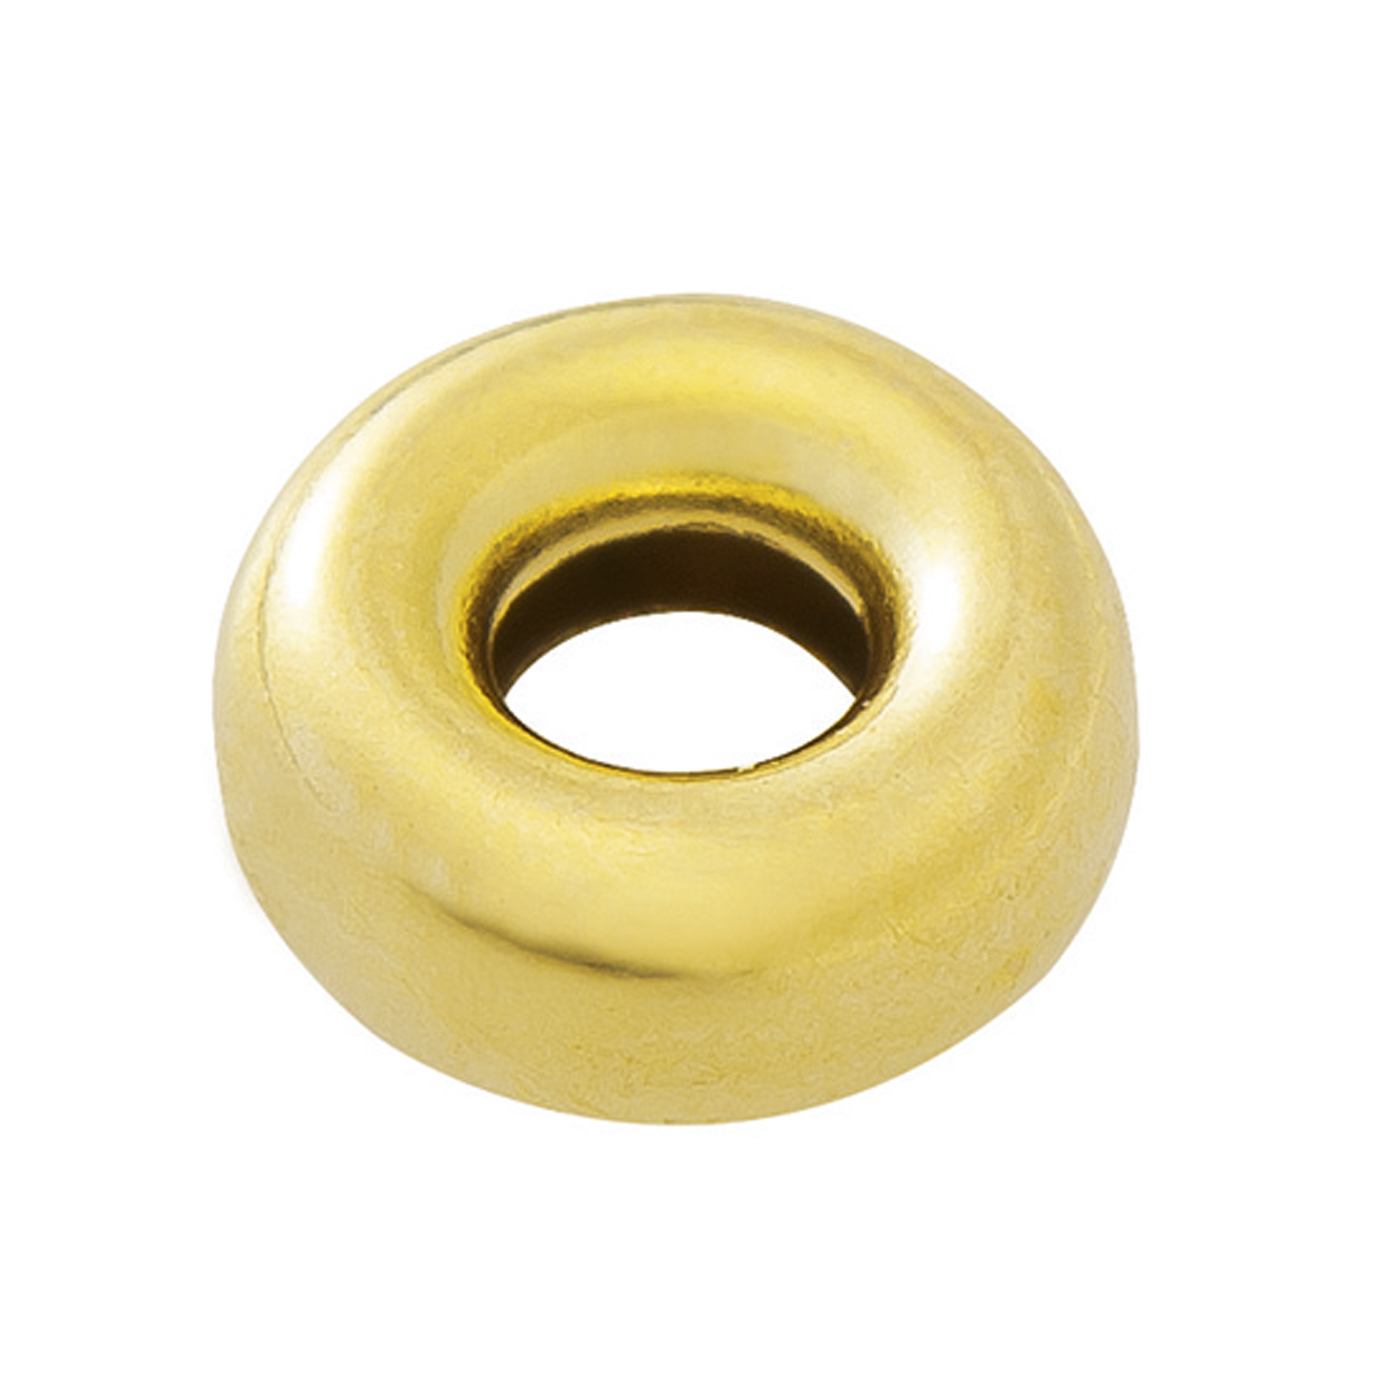 Hollow Ring, 585G Polished, ø 3 x 1.8 mm - 1 piece